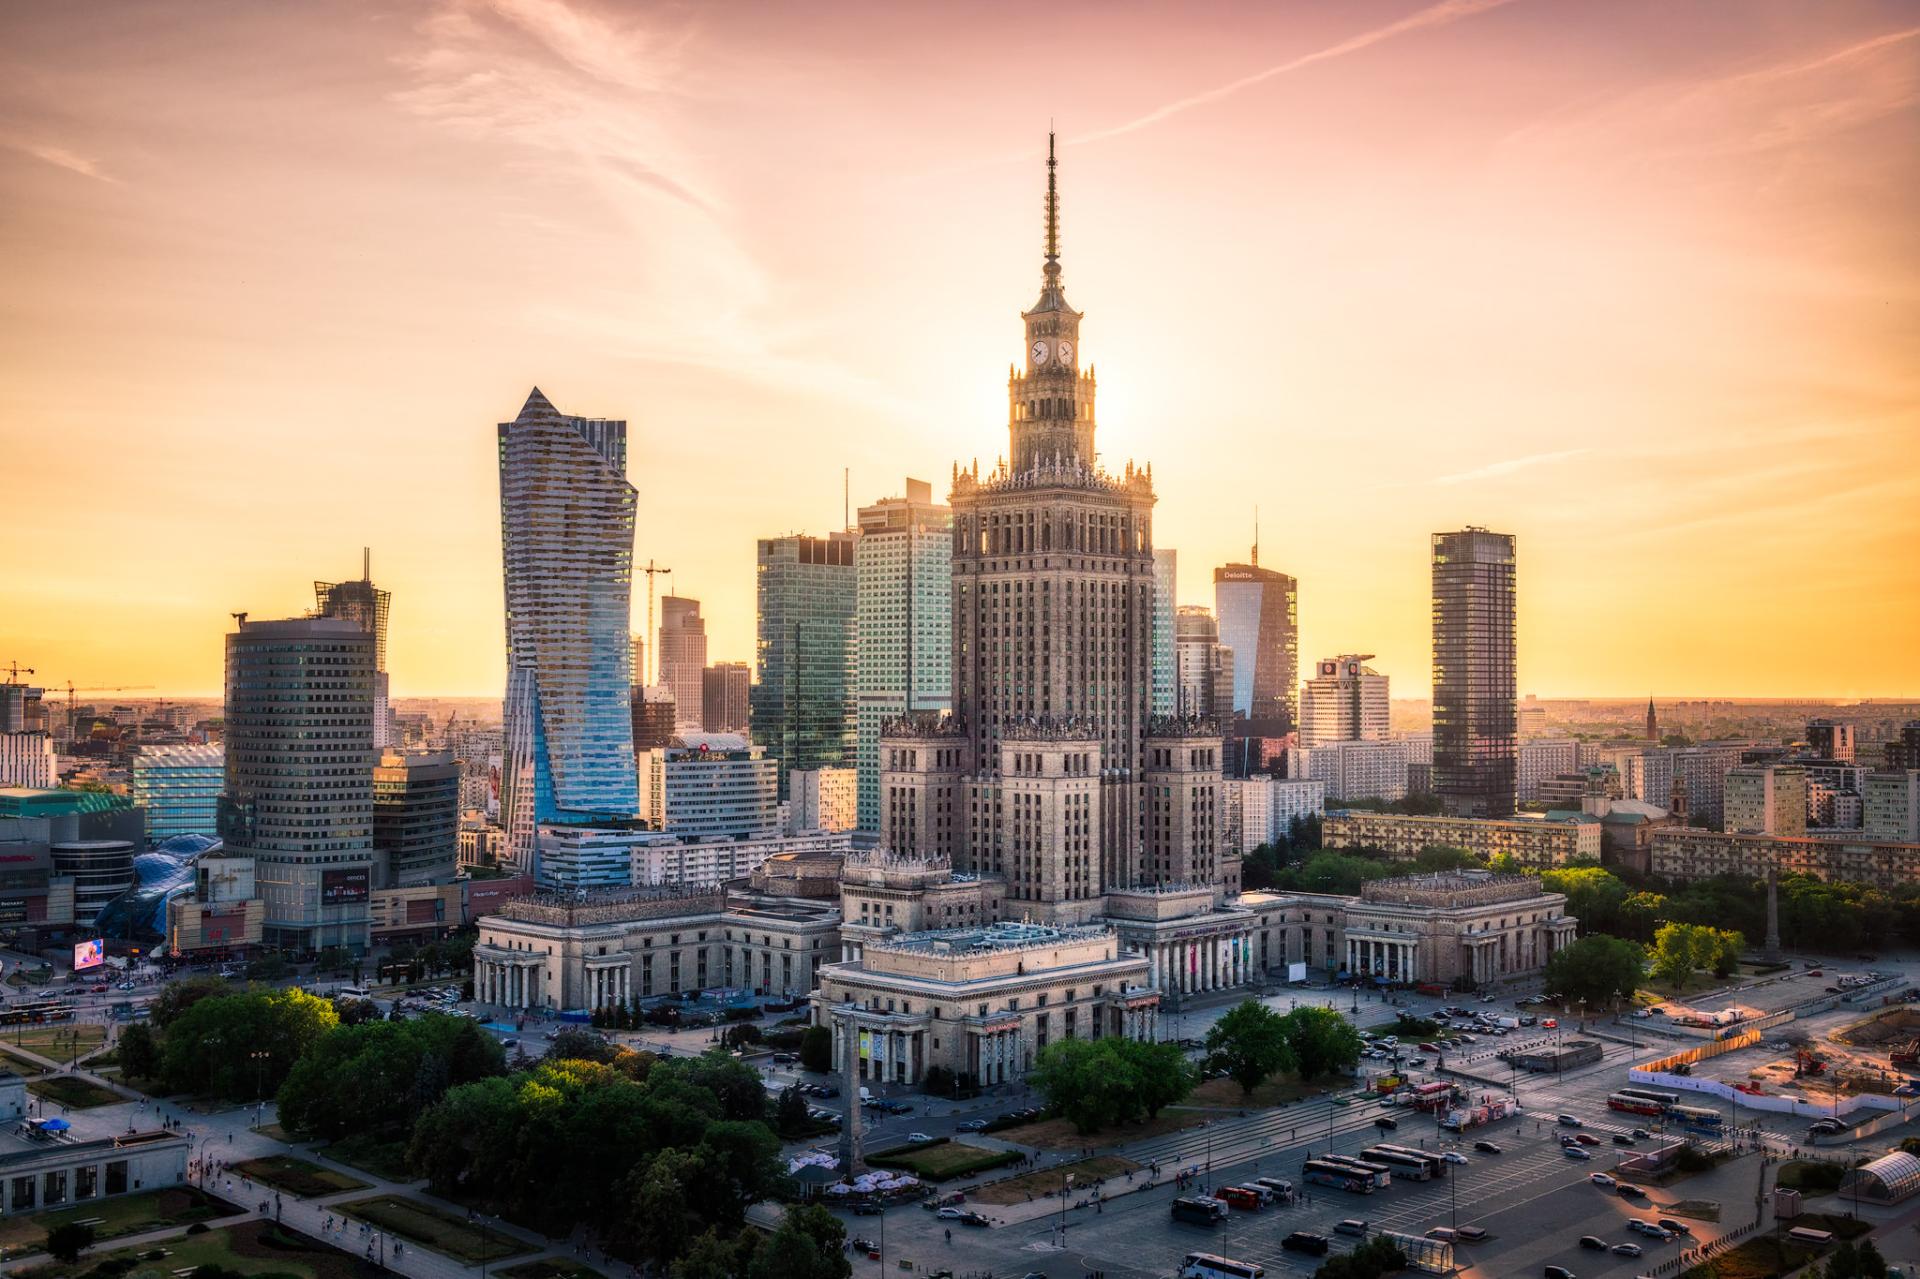 European Photography Awards Winner - Palace Glow: Warsaw's Skyline at Dusk